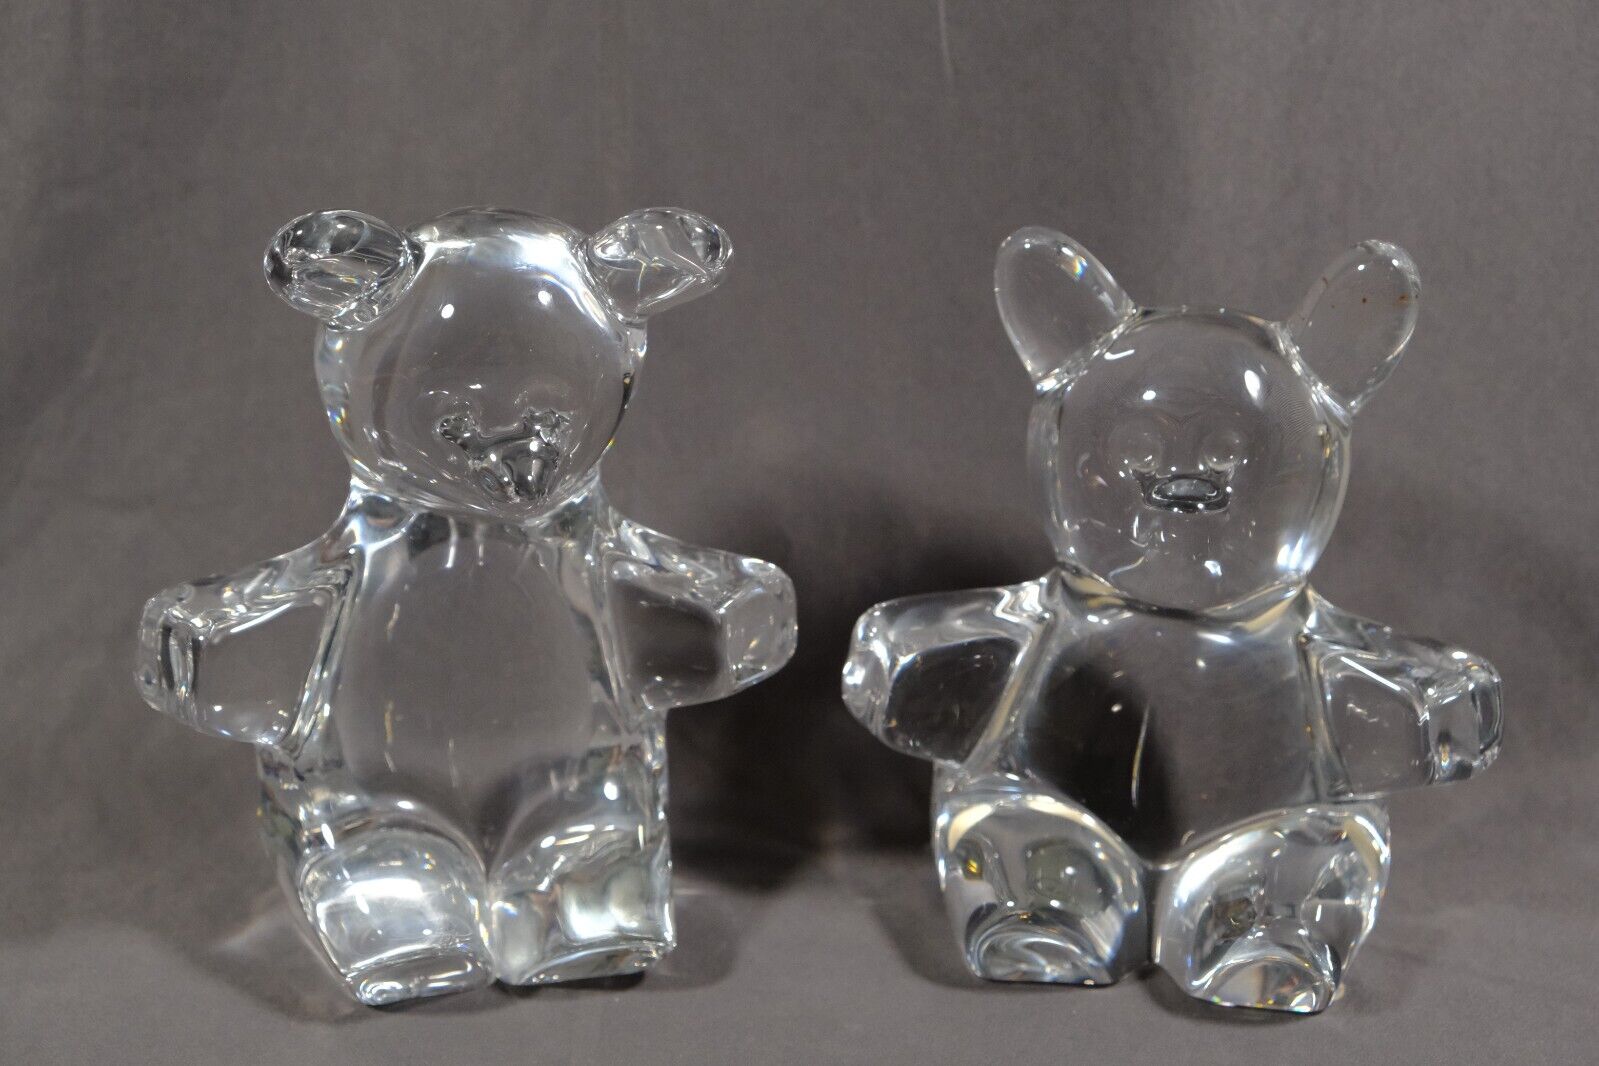 2 x Daum France Crystal Glass Teddy Bear Figurine or Paperweight